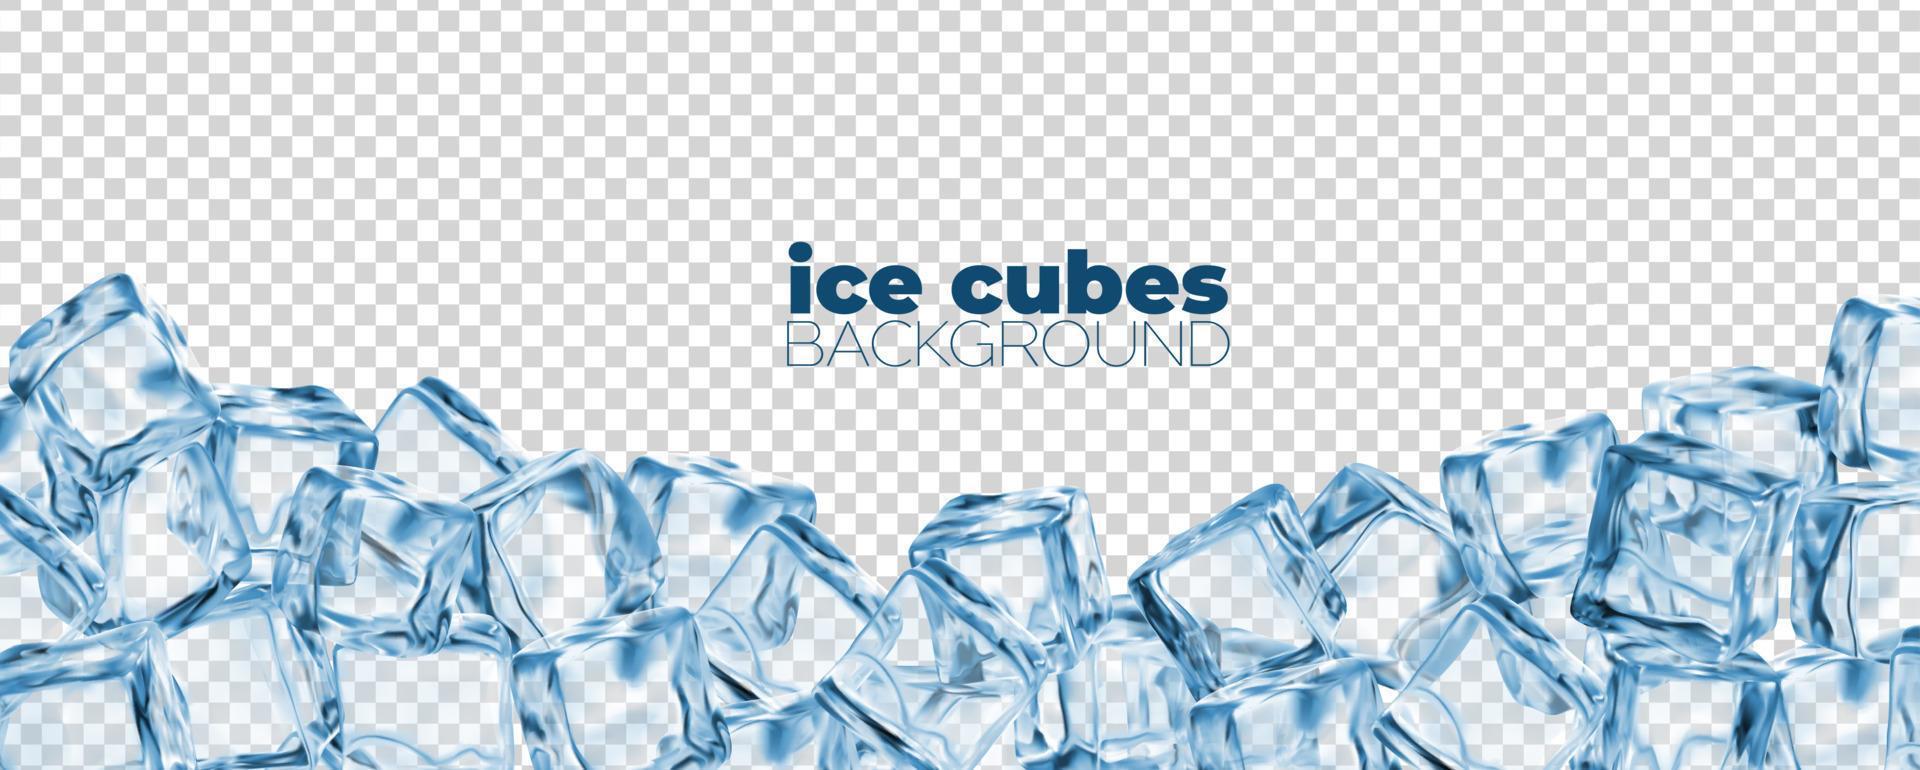 Fondo de vector de cubos de cristal de hielo azul realista